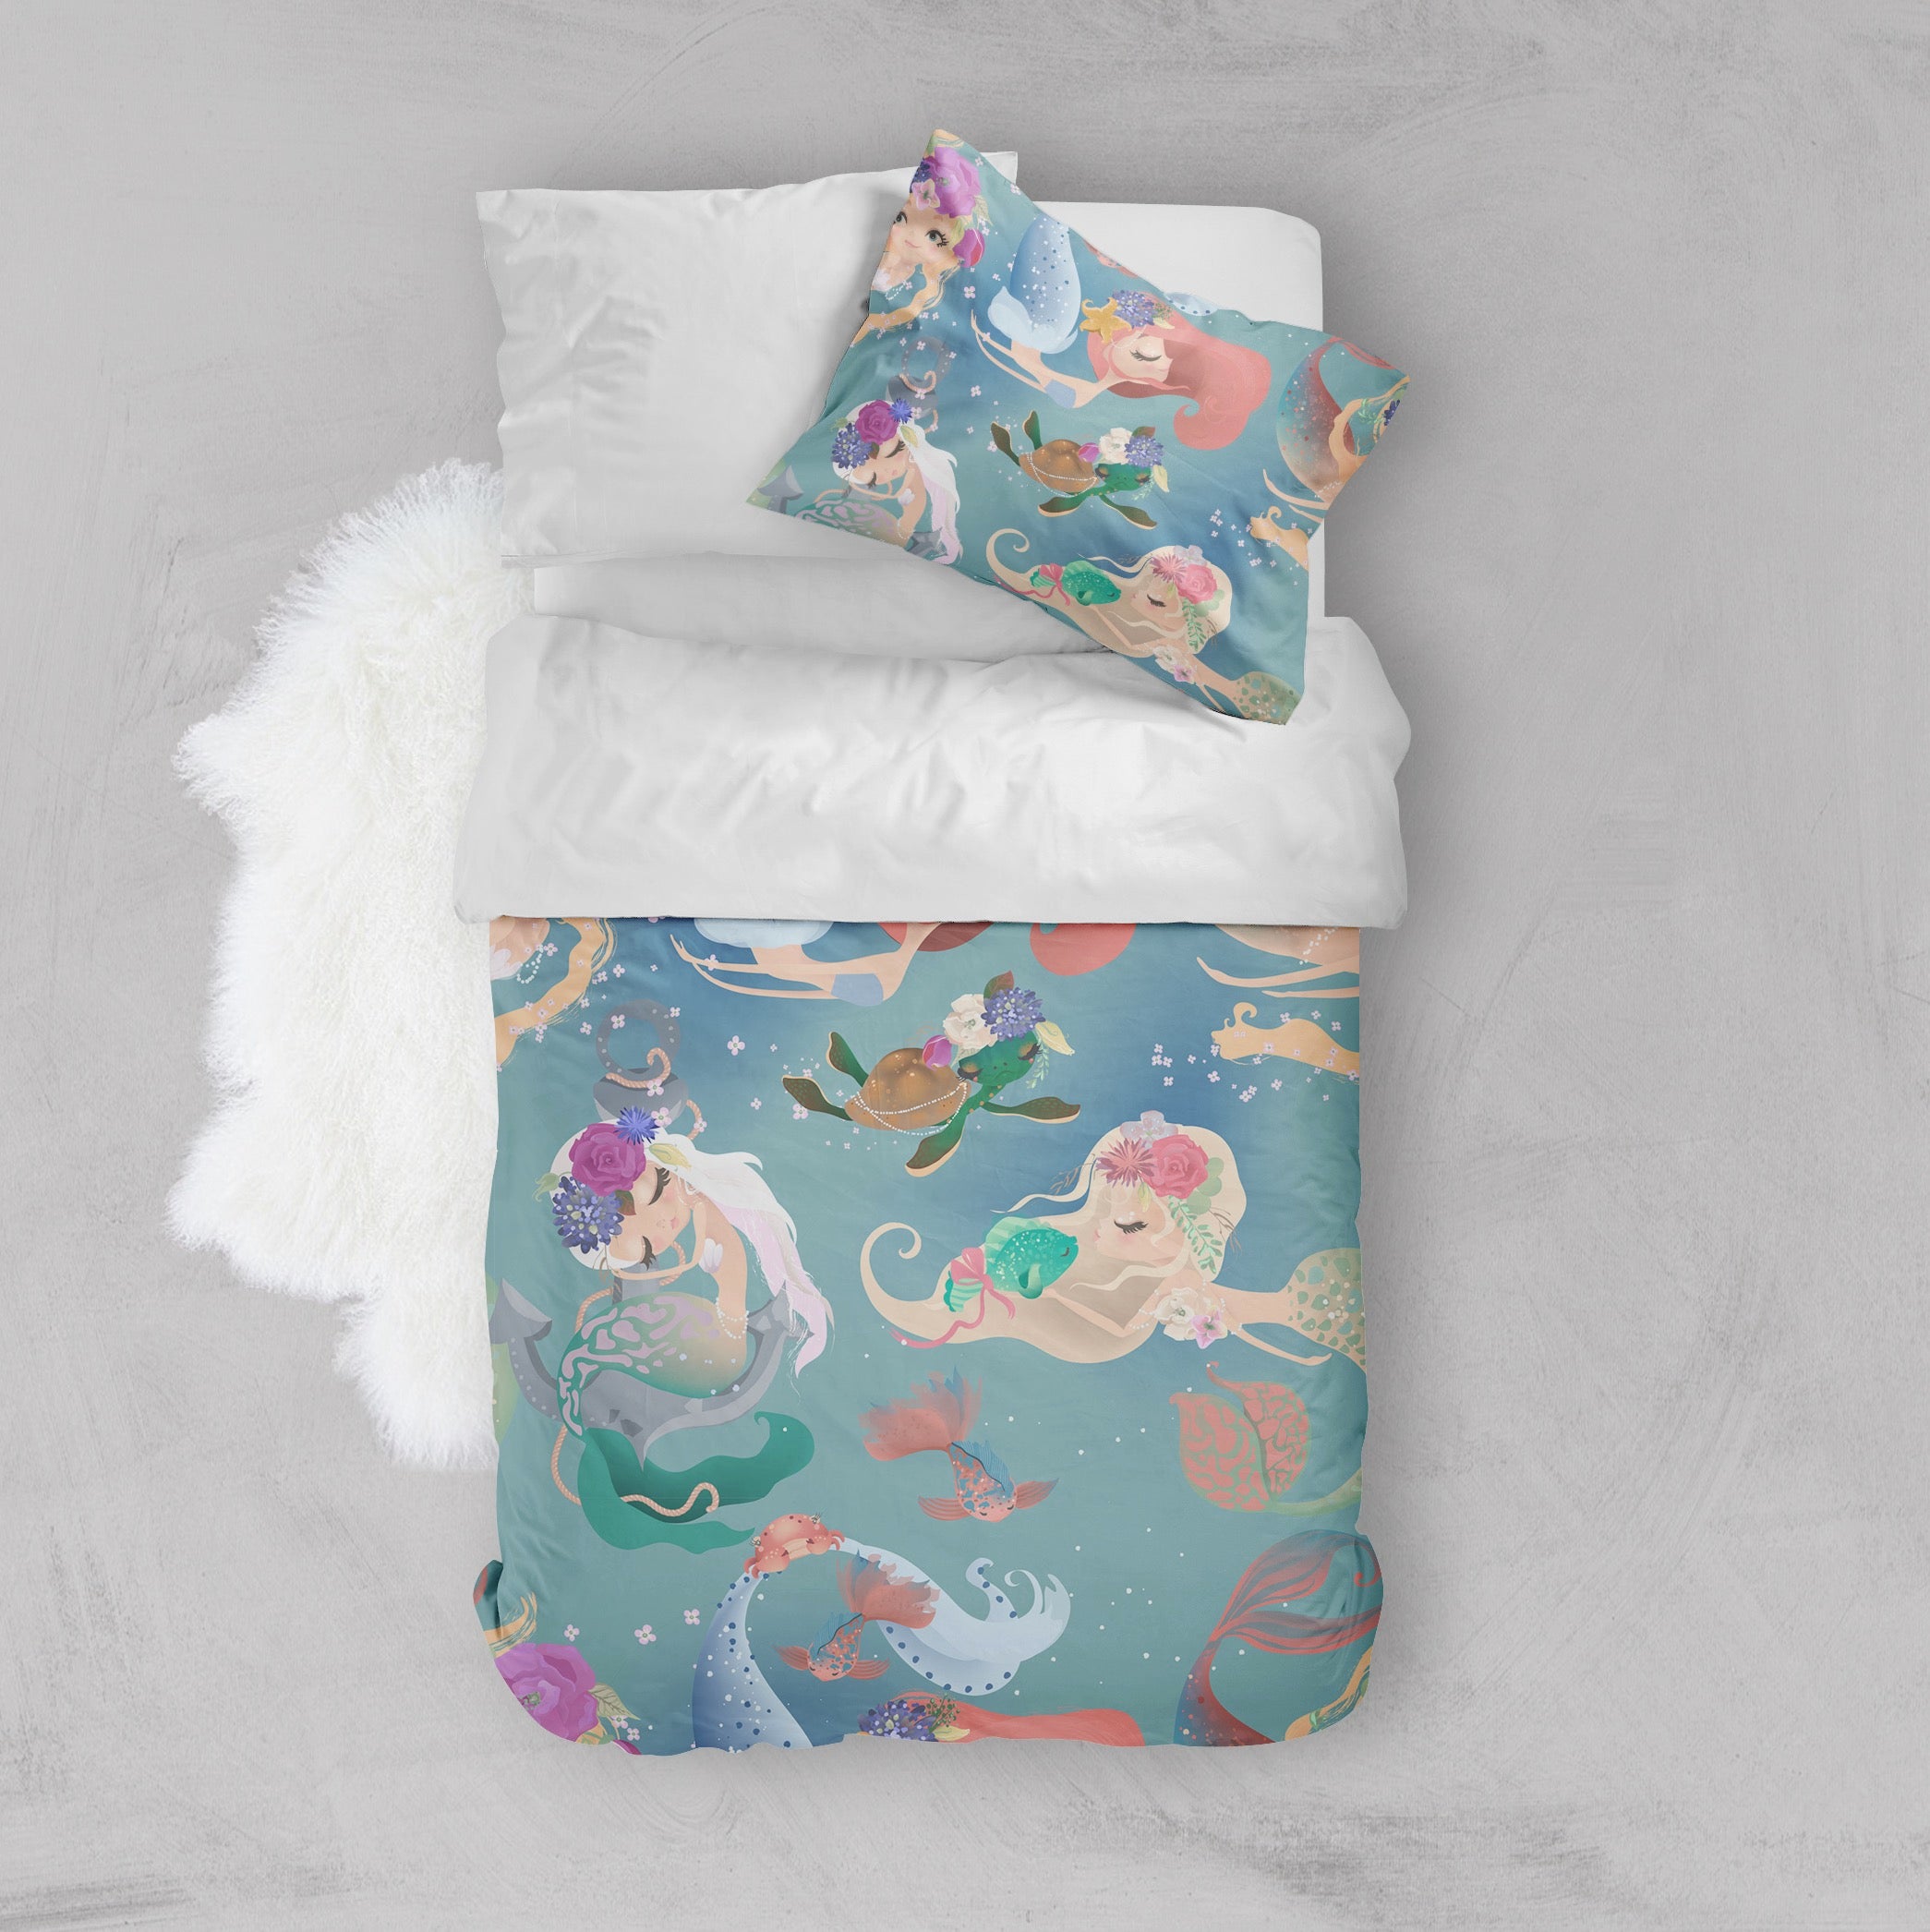 girls mermaid bedding